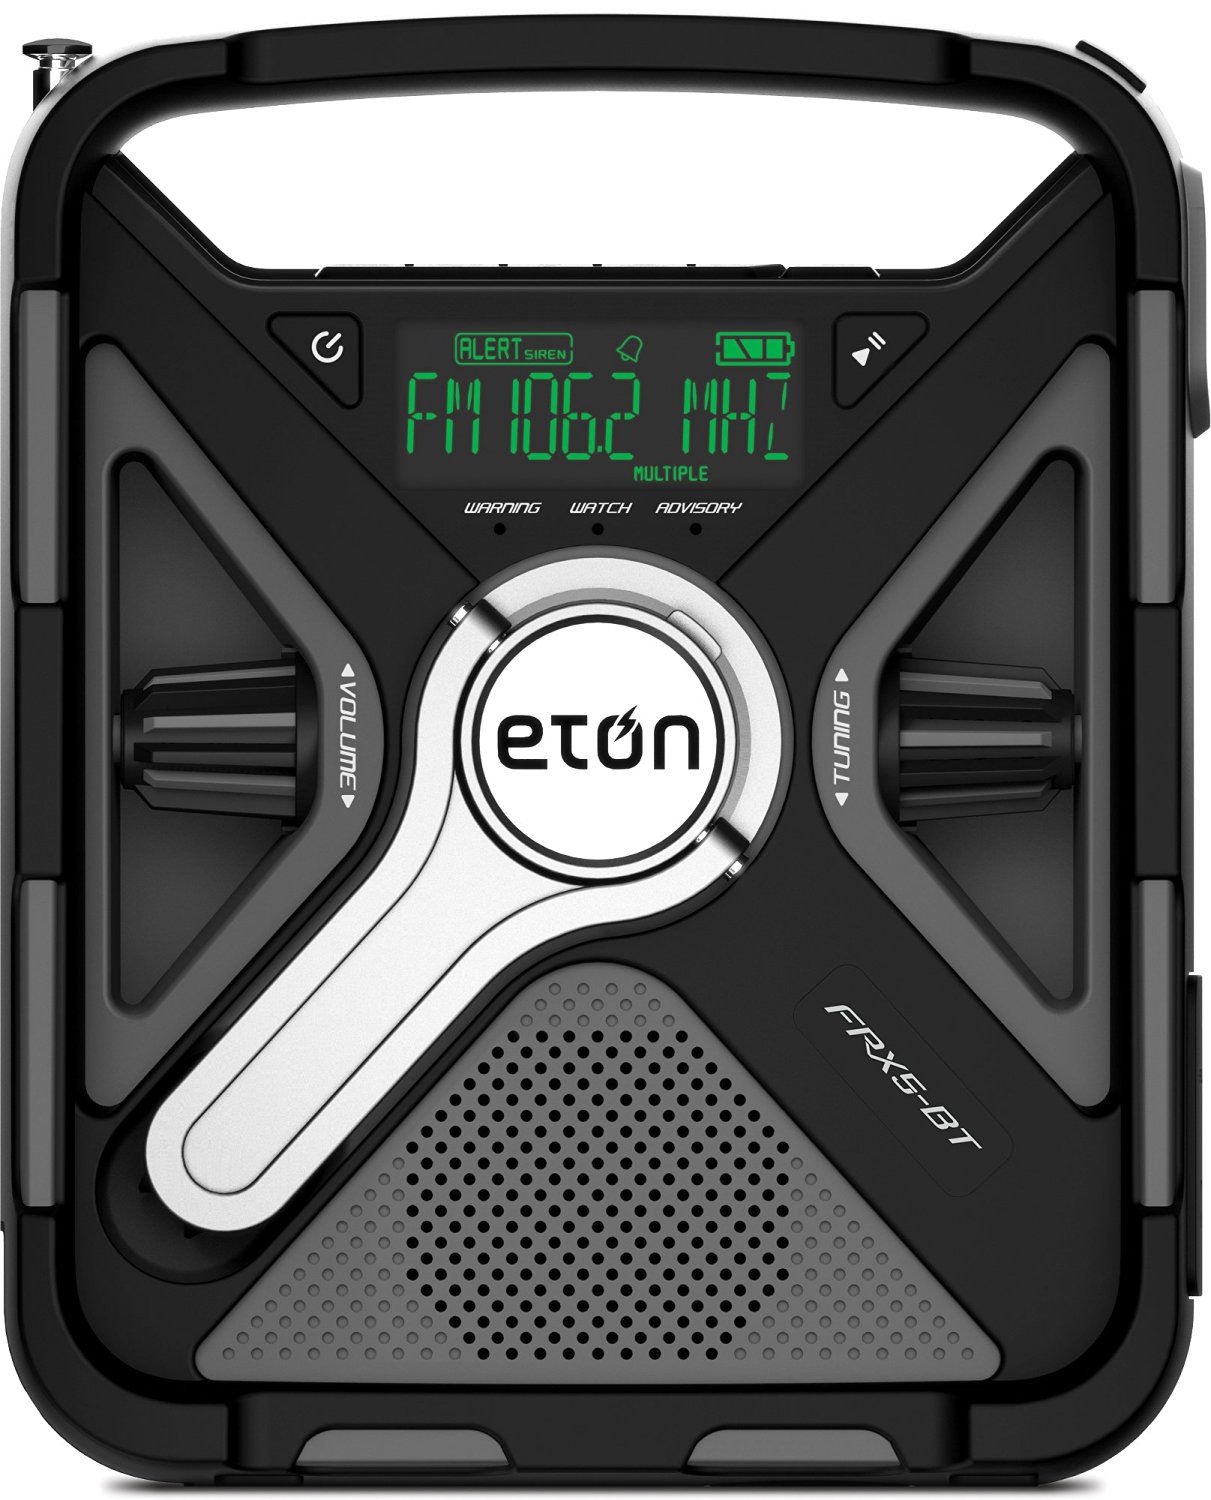 Eton FRX5 All Purpose Weather Alert Radio with Bluetooth – Just $49.99!